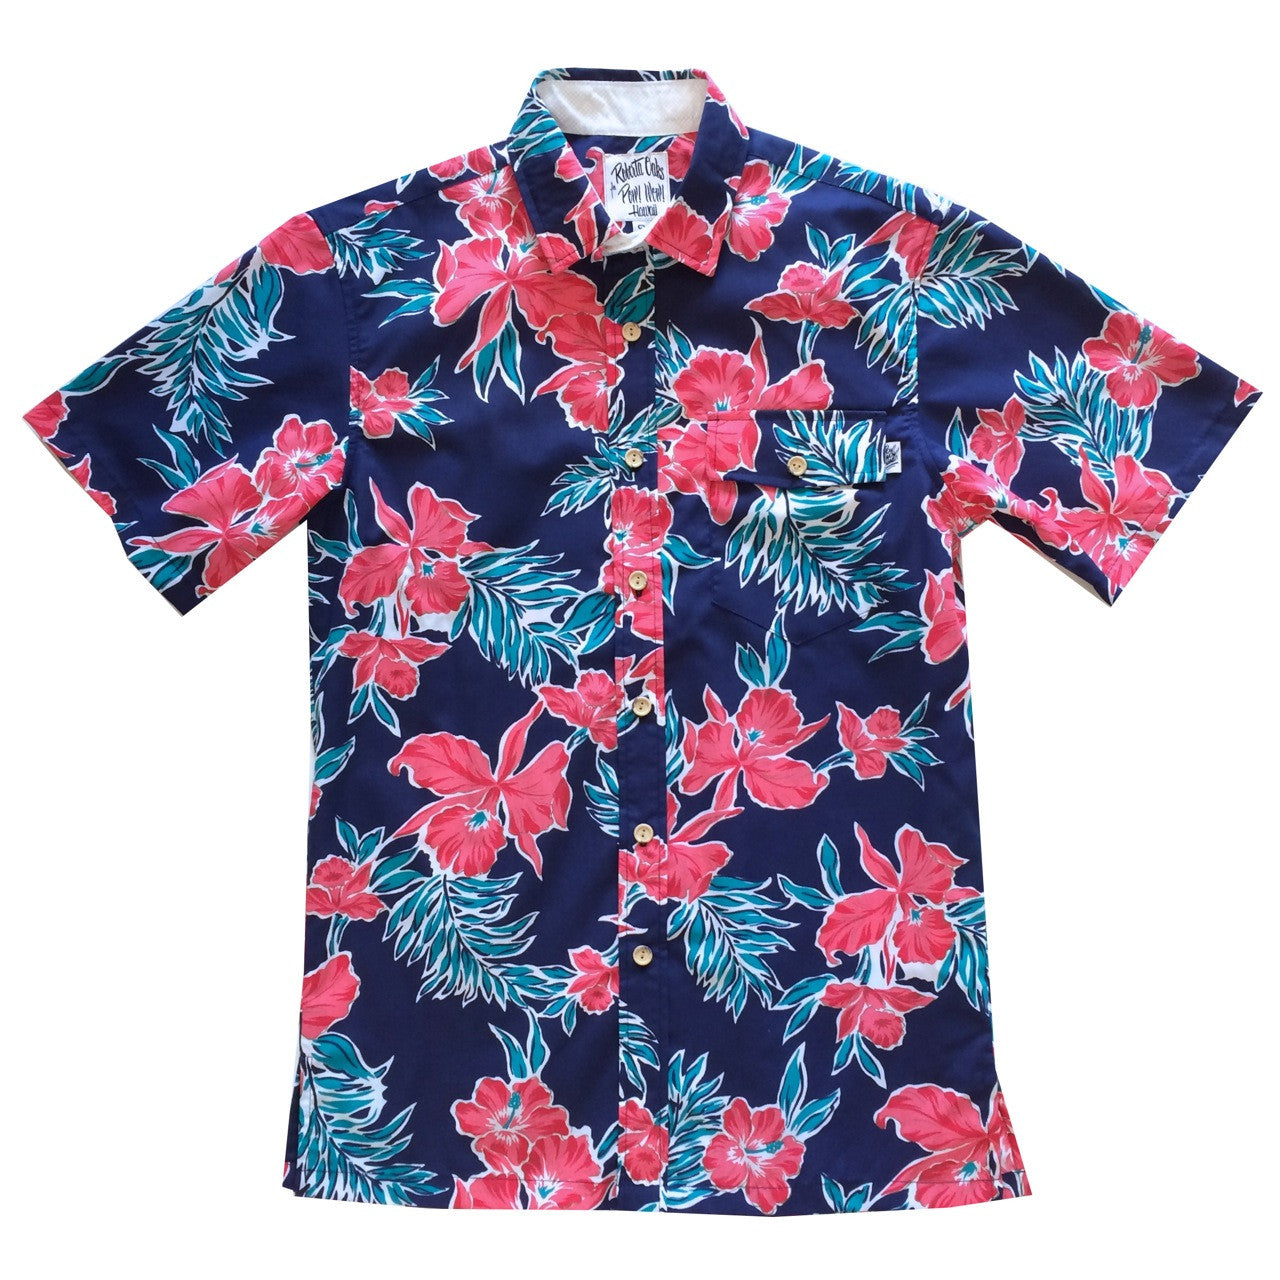 Pow Wow Hawaii 2015 Ahui Shirt - SOLD OUT